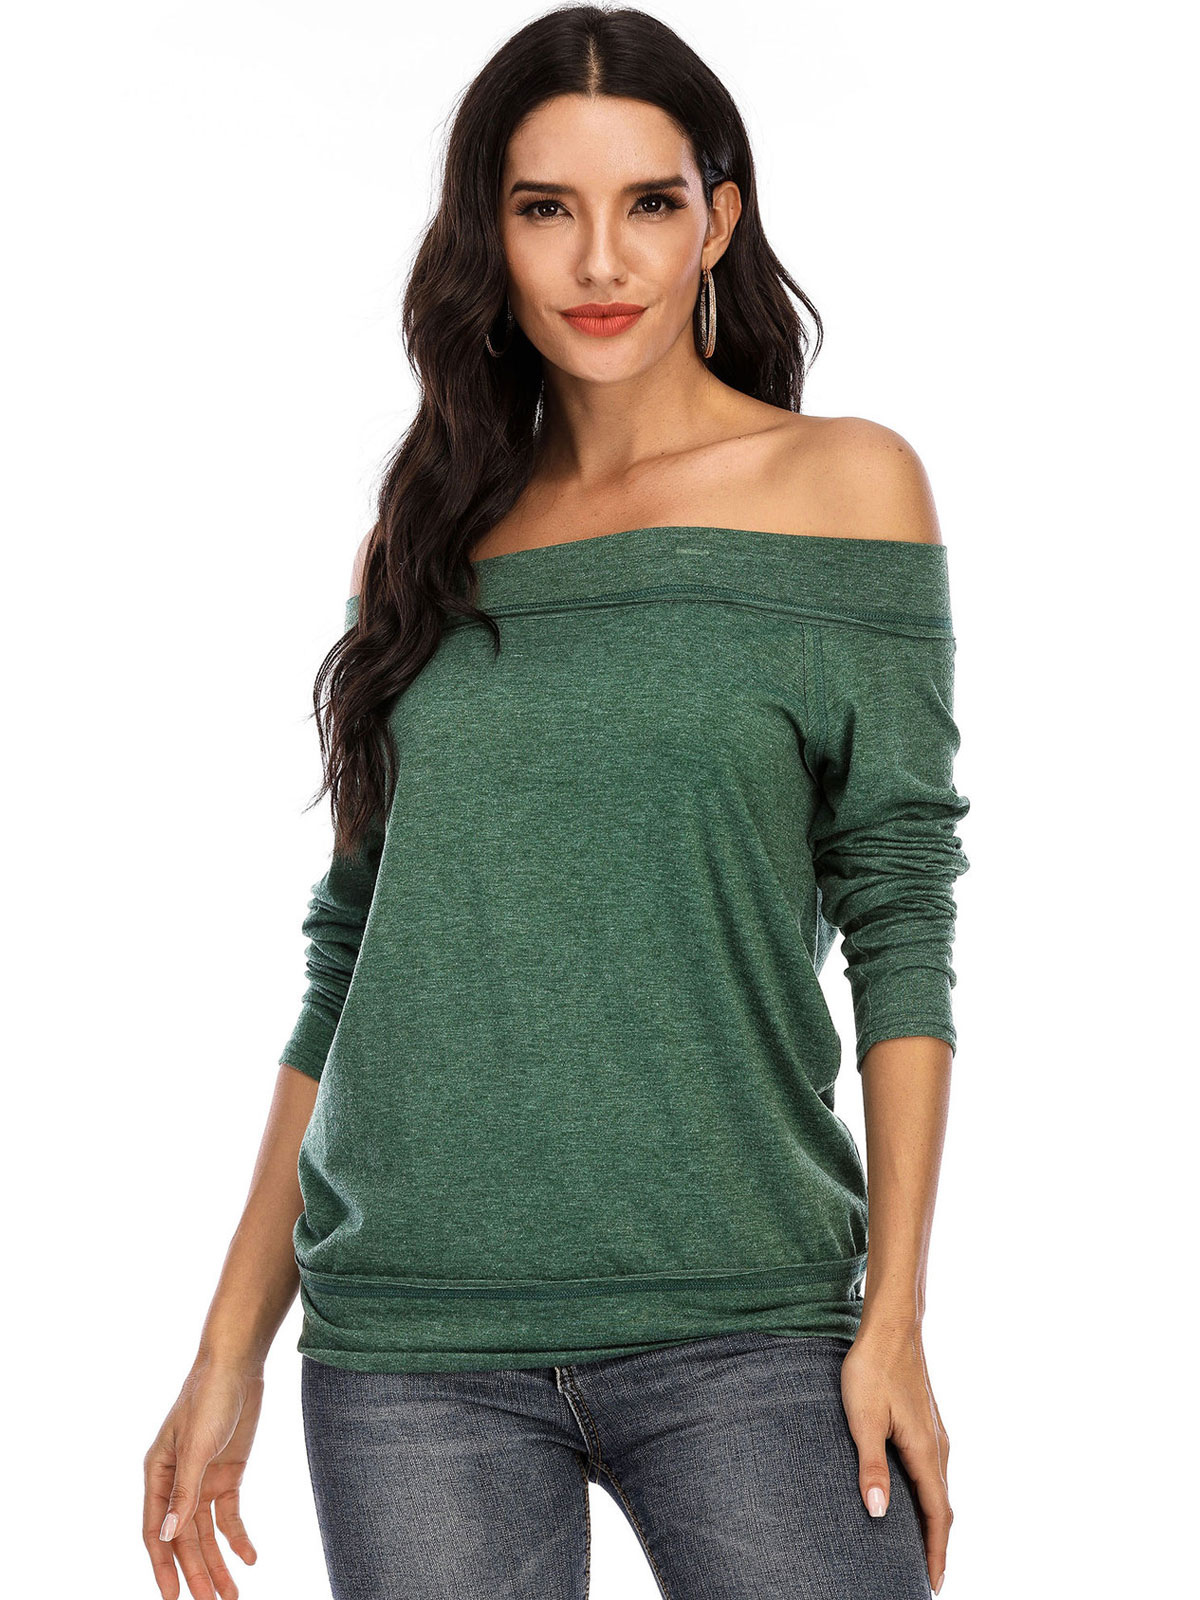 Moda Mujer Tops | Blusa sexy para mujer, cuello barco, manga larga, poliéster, camiseta de verano verde - LA62046